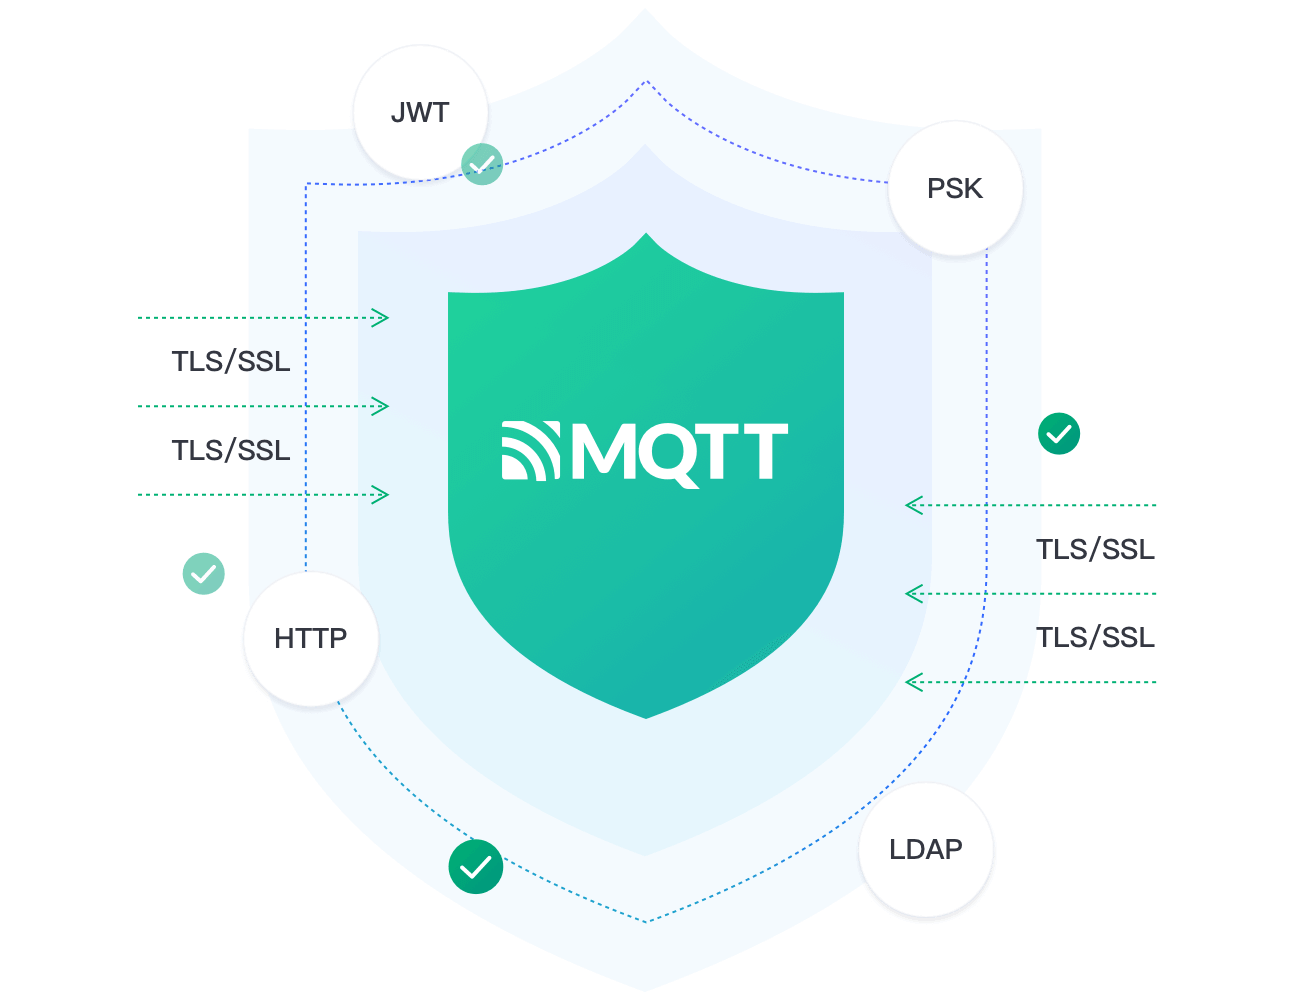 MQTT Security